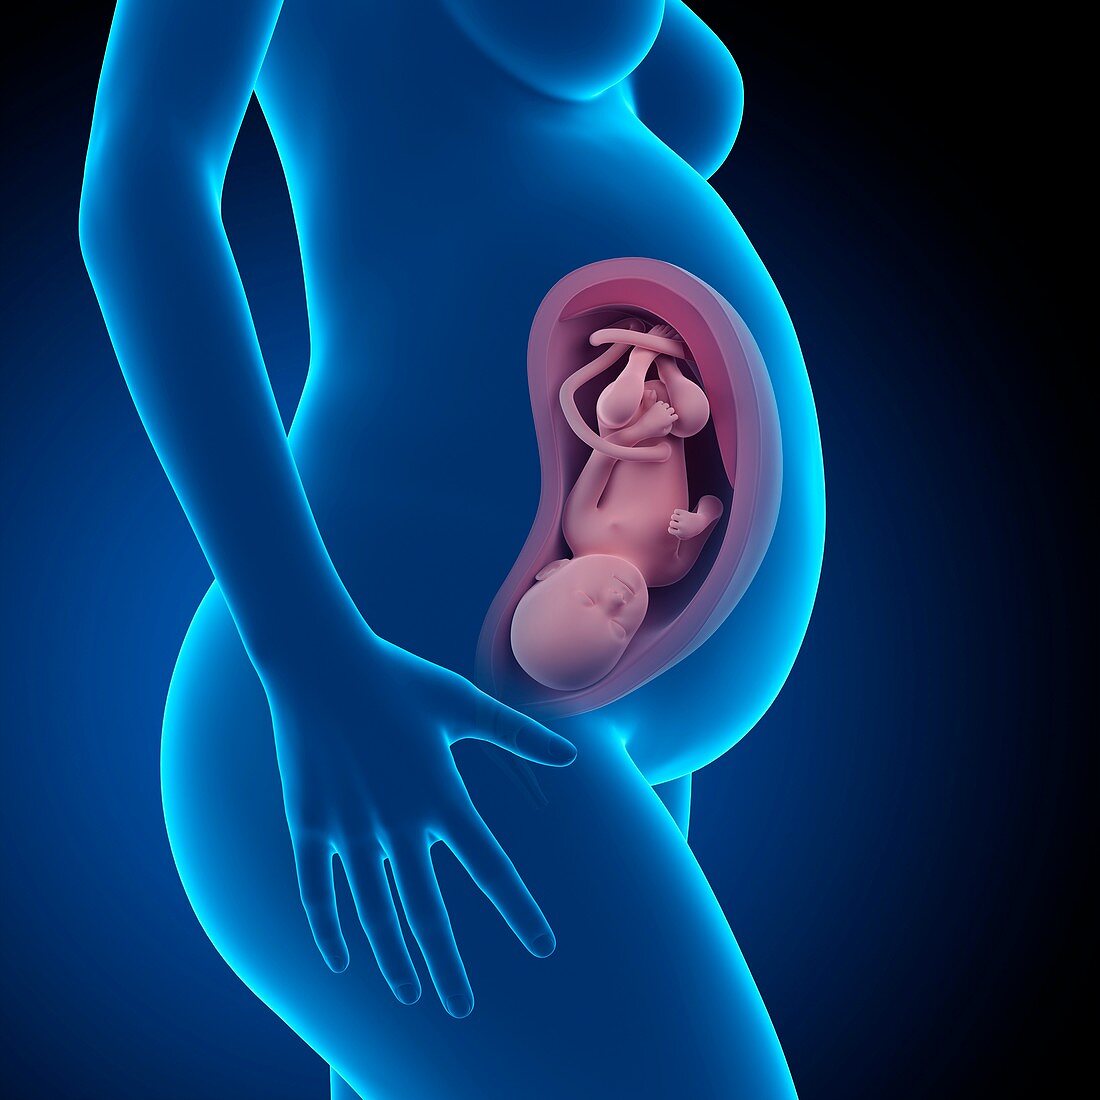 Human fetus age 36 weeks